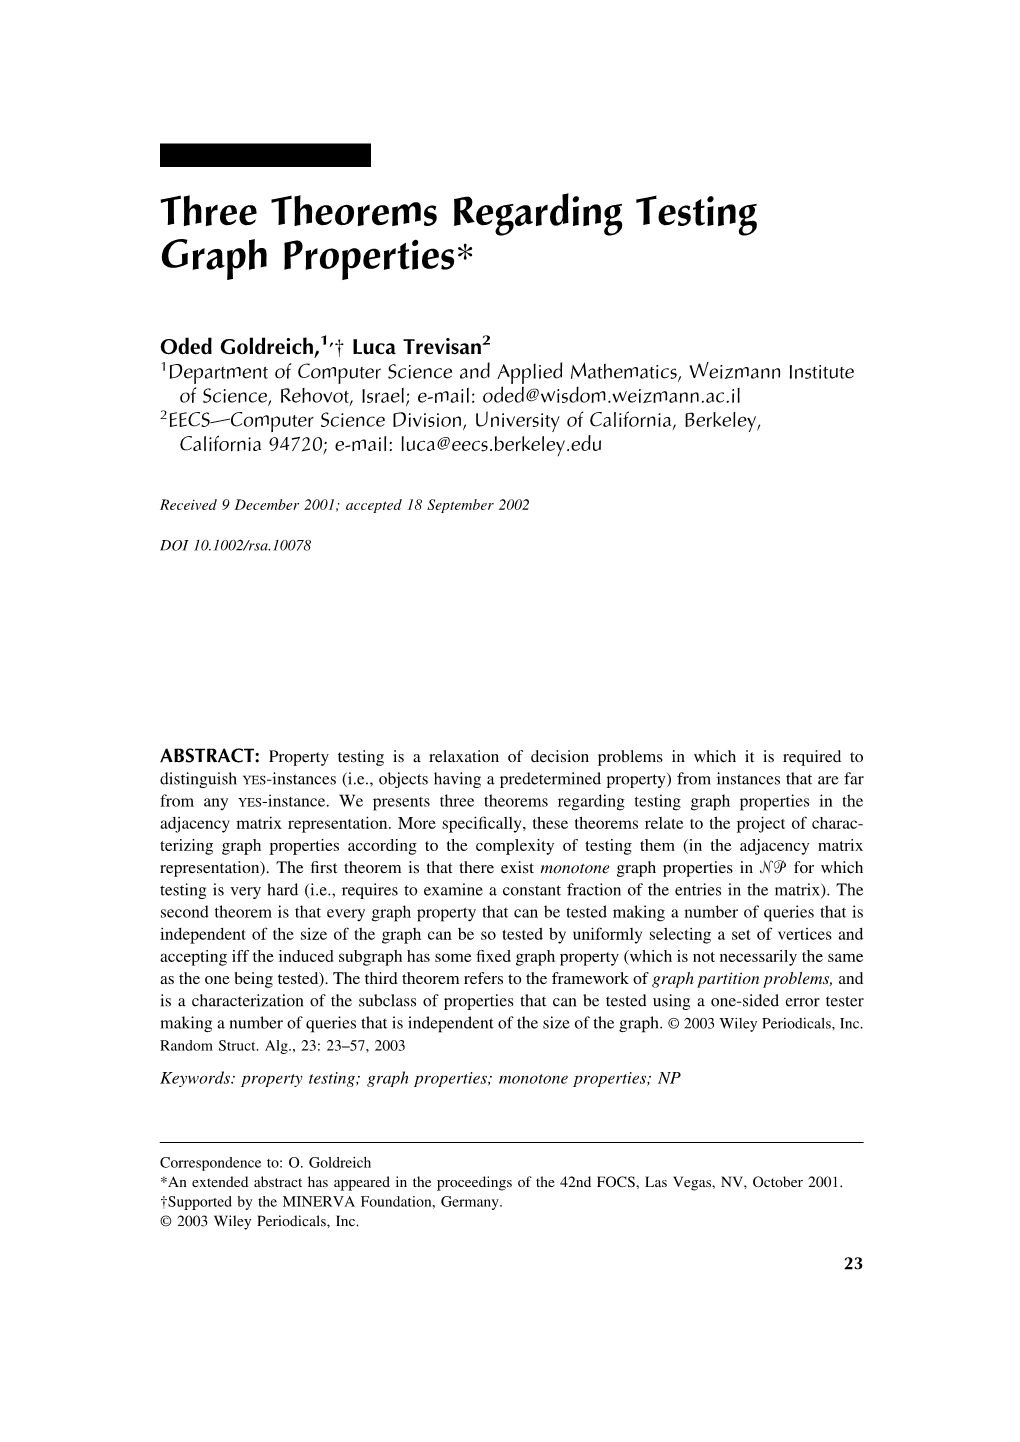 Three Theorems Regarding Testing Graph Properties*